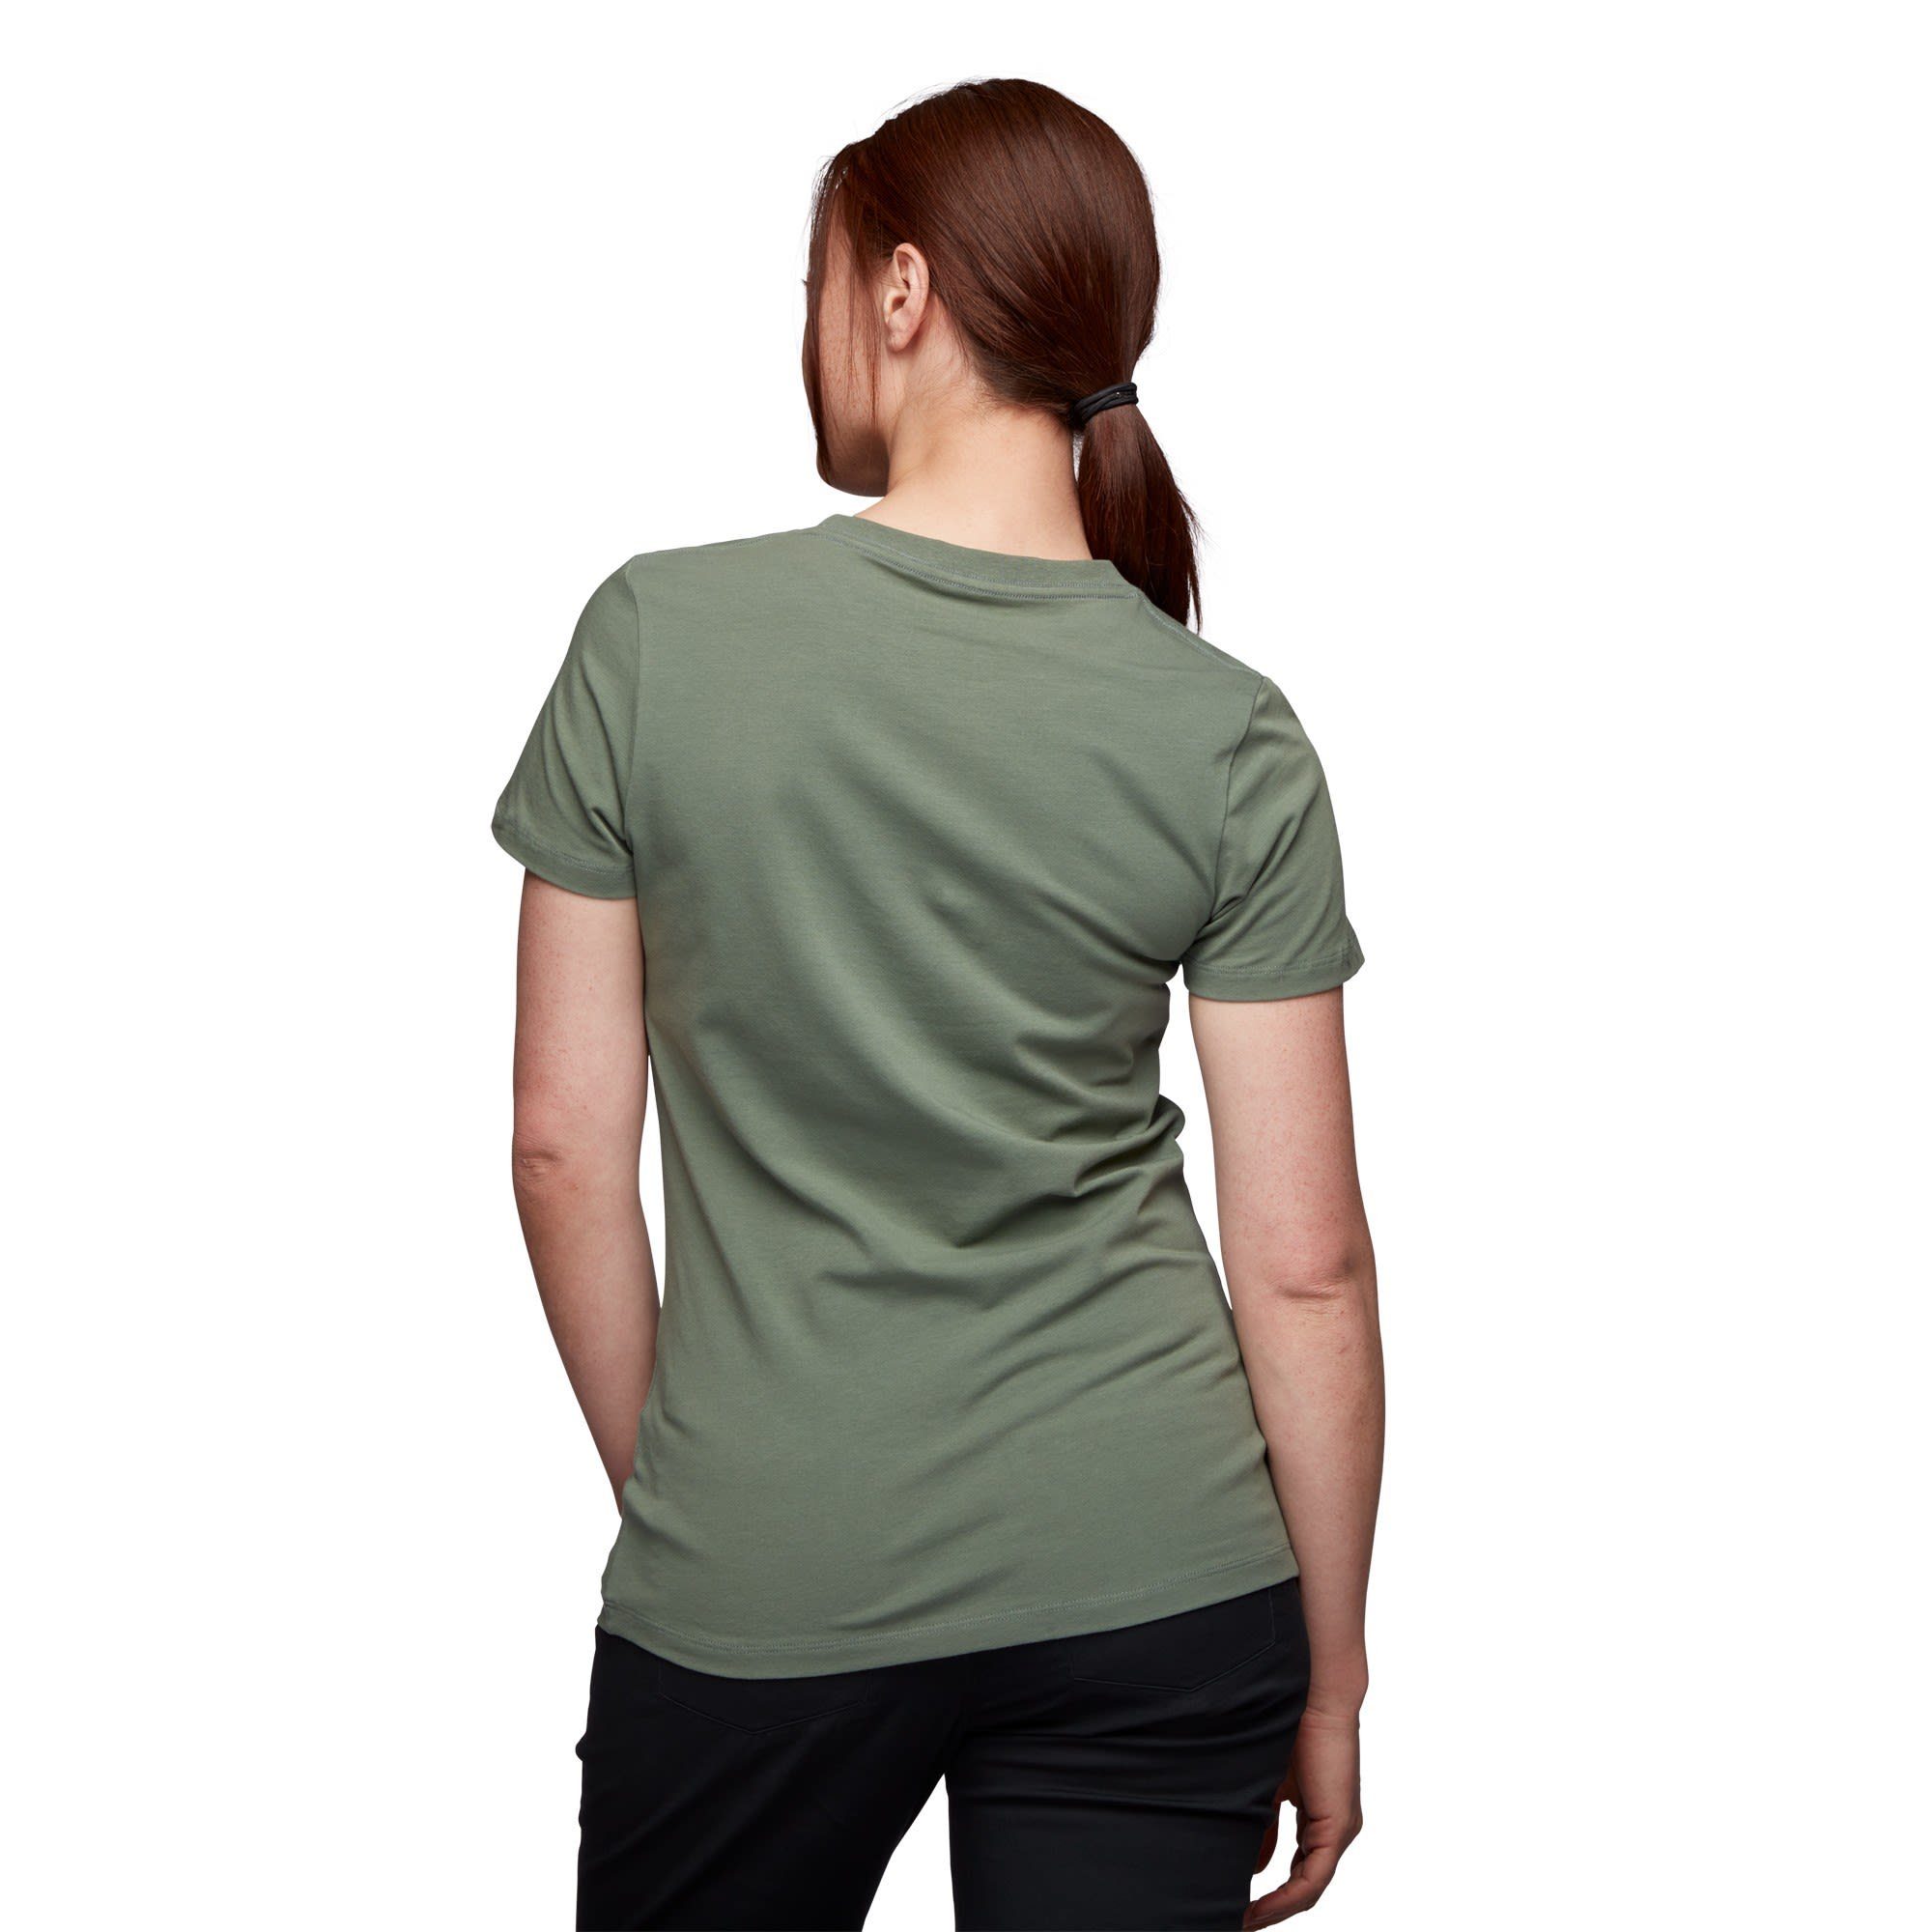 Tee Laurel Diamond Green T-Shirt Black Damen Kurzarm-Shirt W Black Chalked Diamond Up